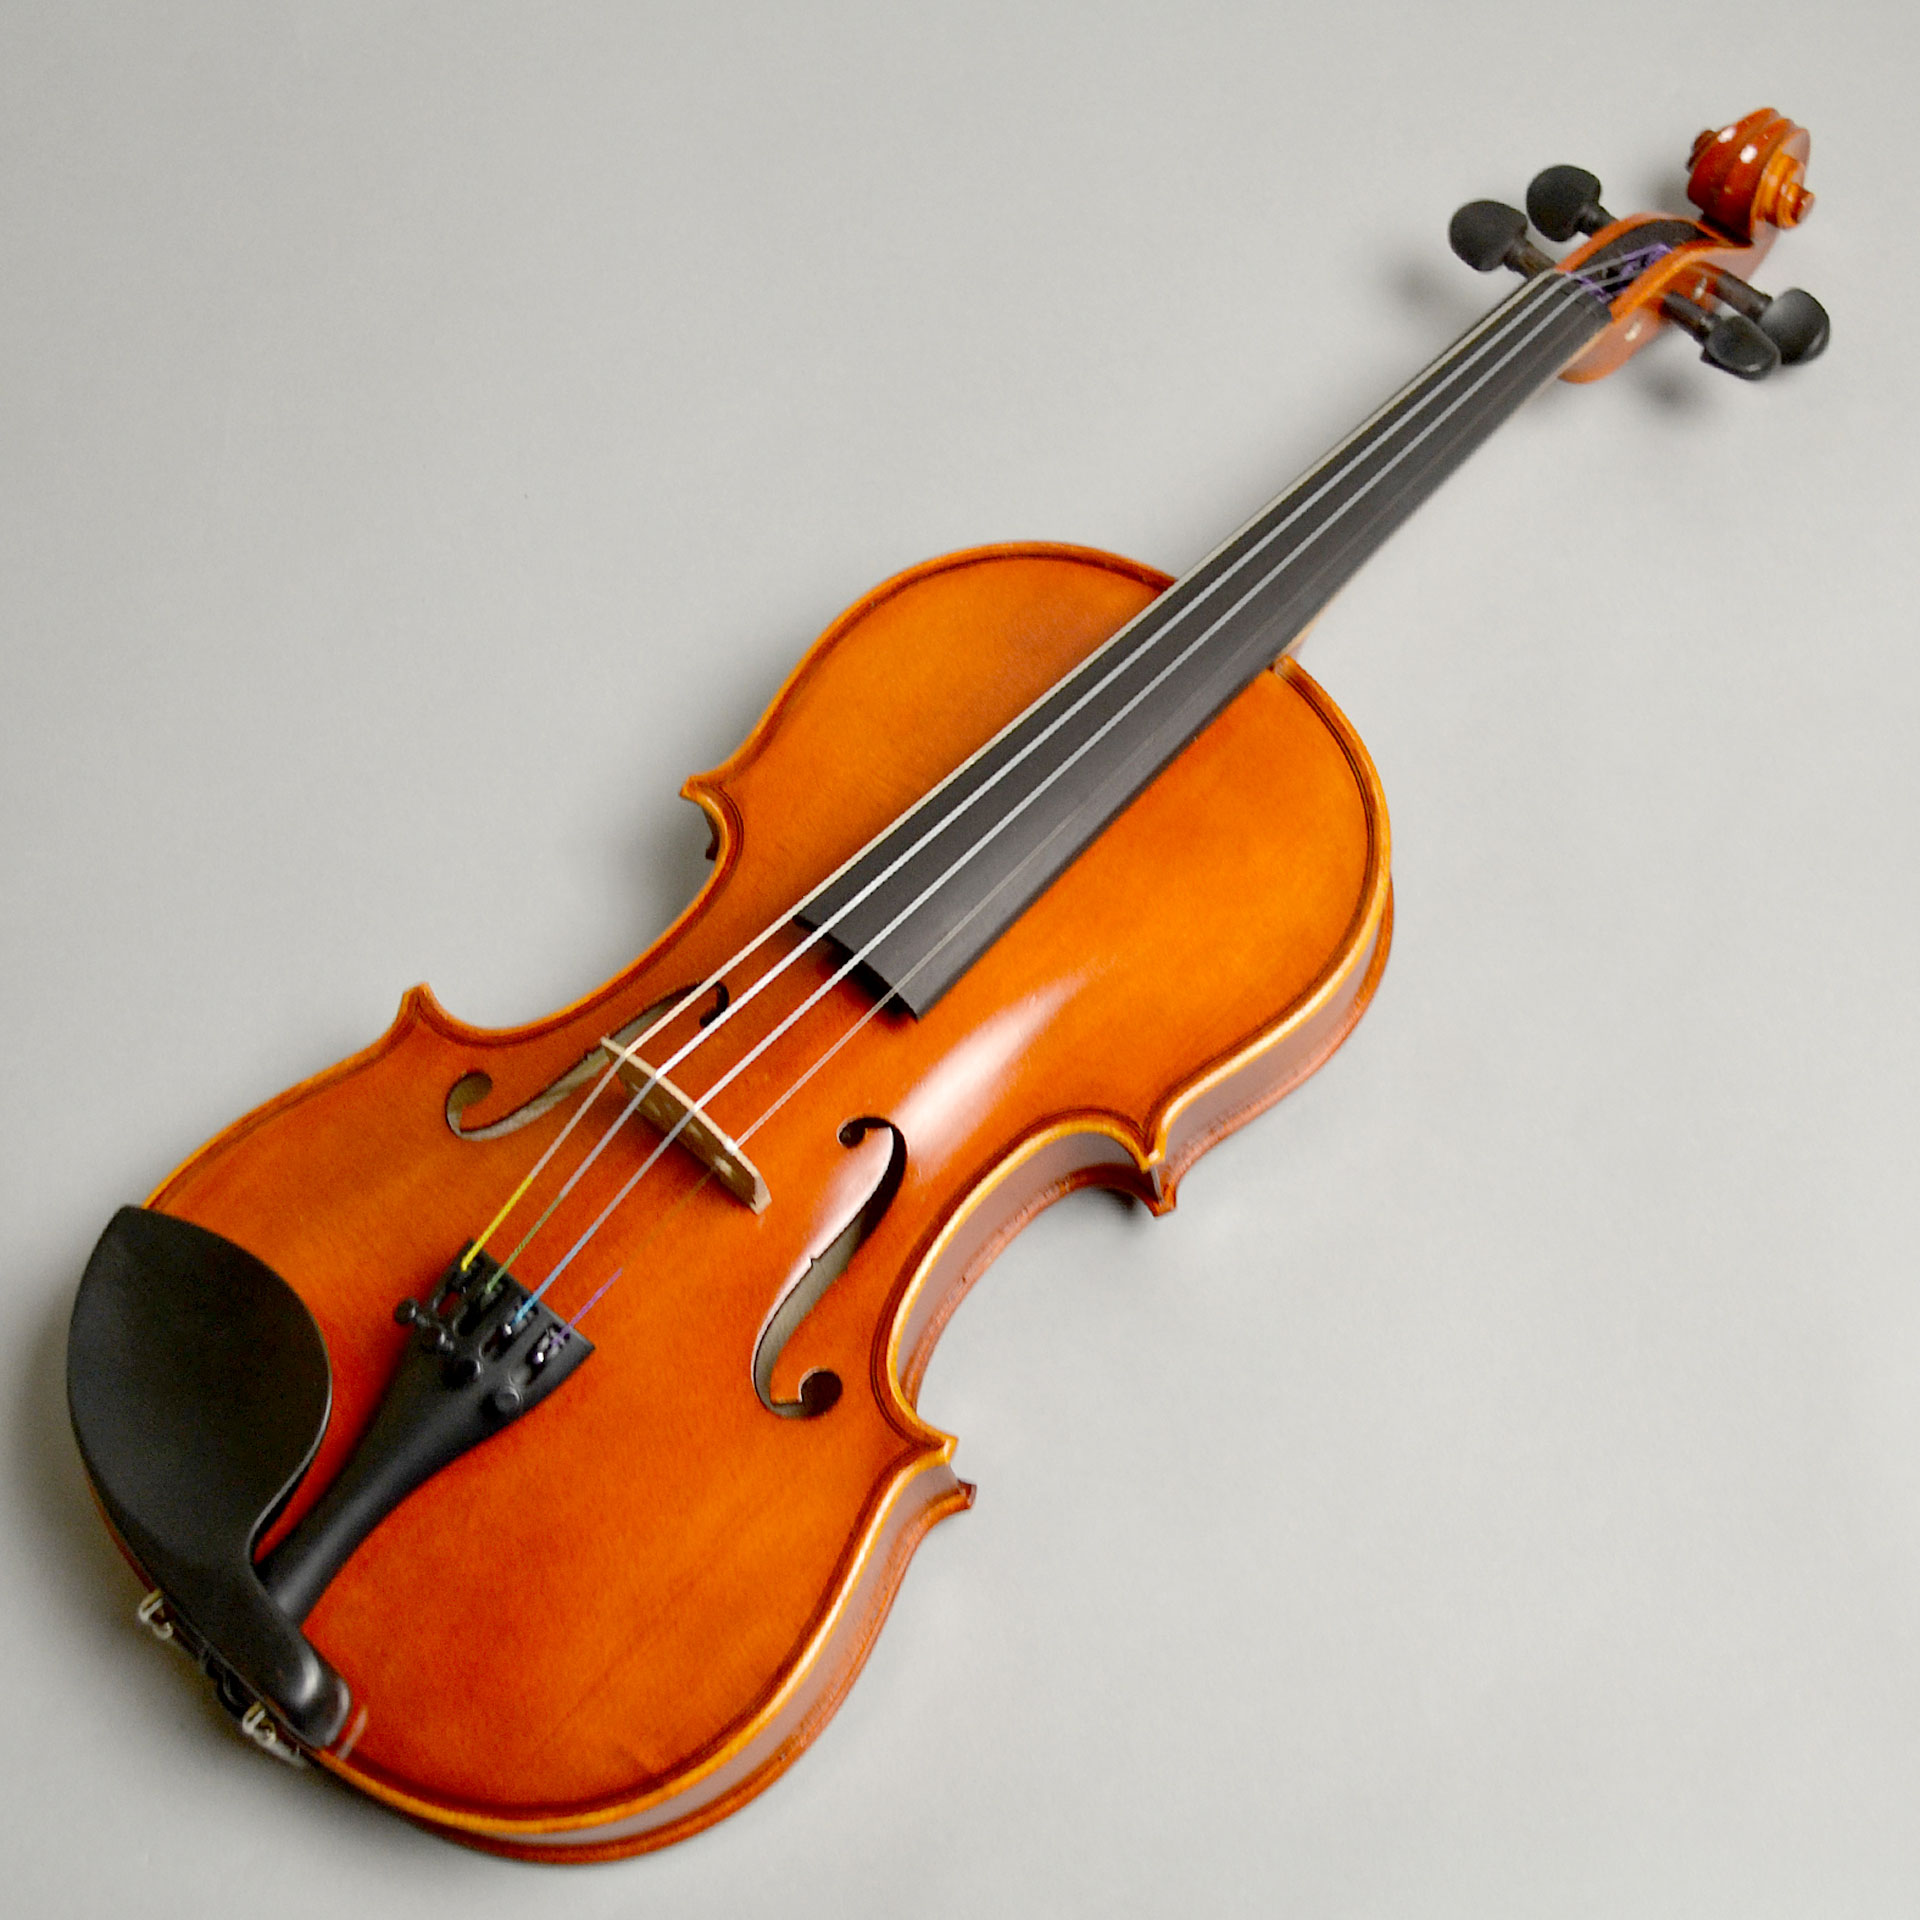 EASTMAN イーストマン バイオリン No.VL80 4/4 2019年製弦楽器